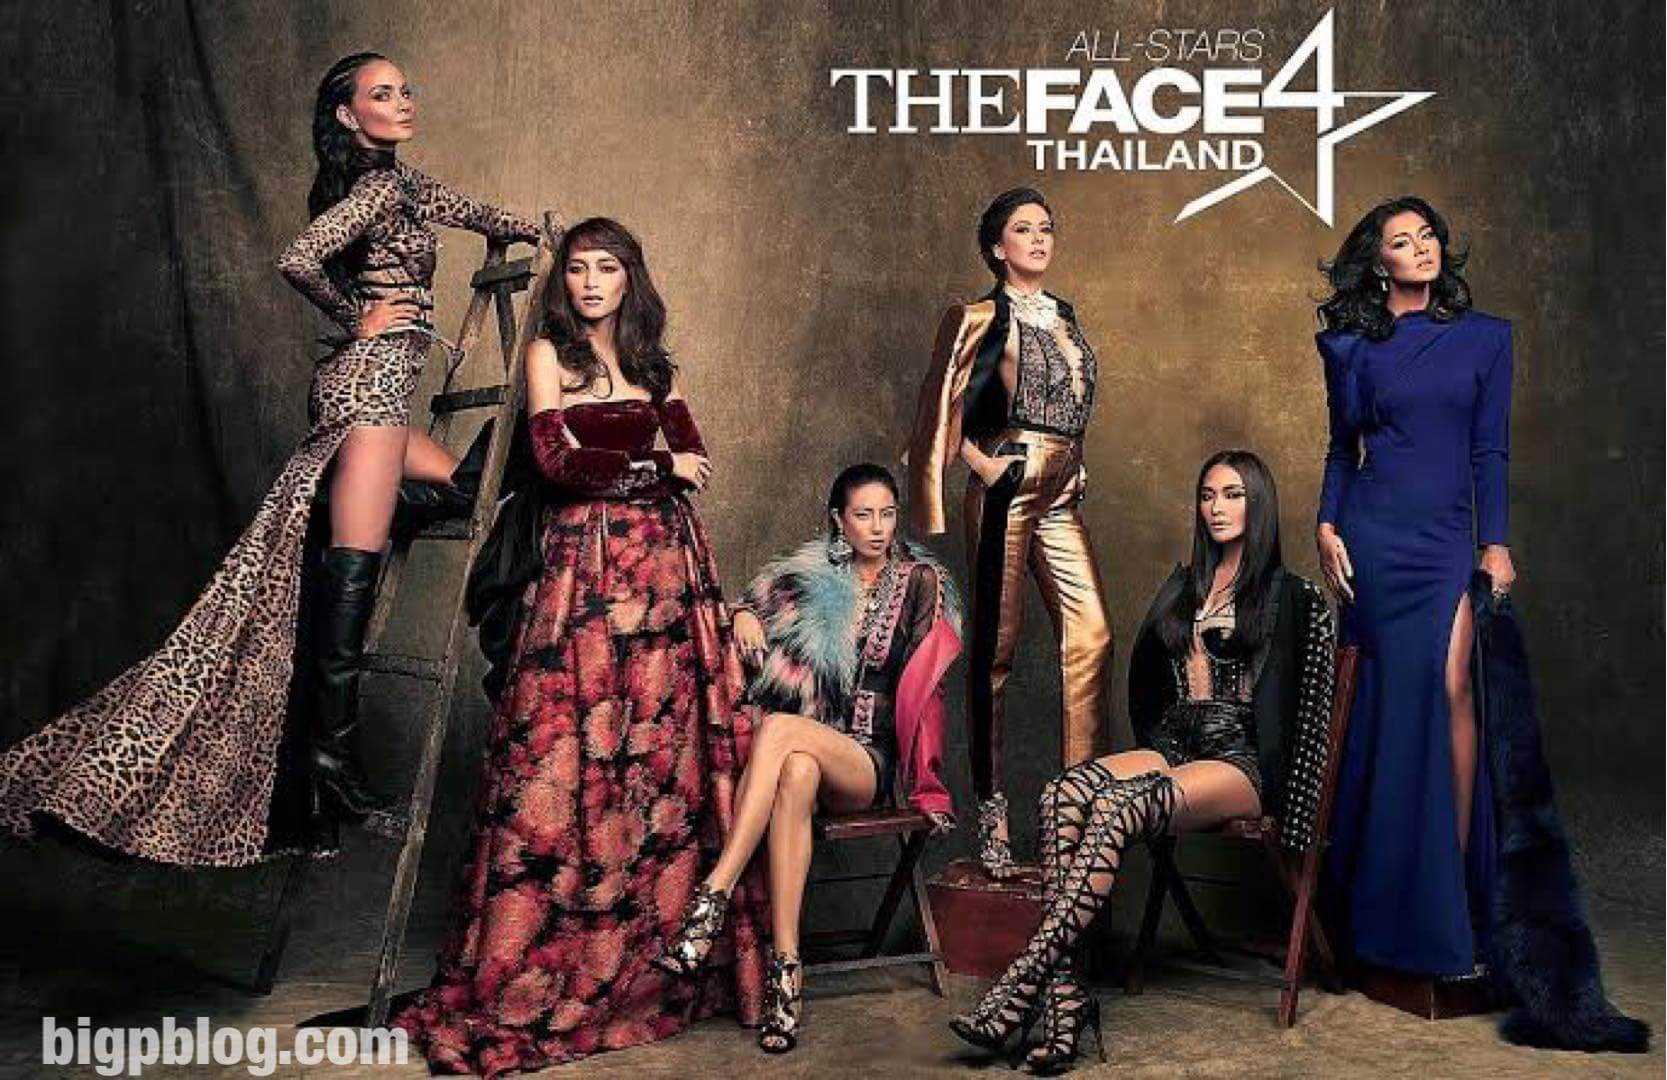 The Face Thailand Season 4 All-Stars